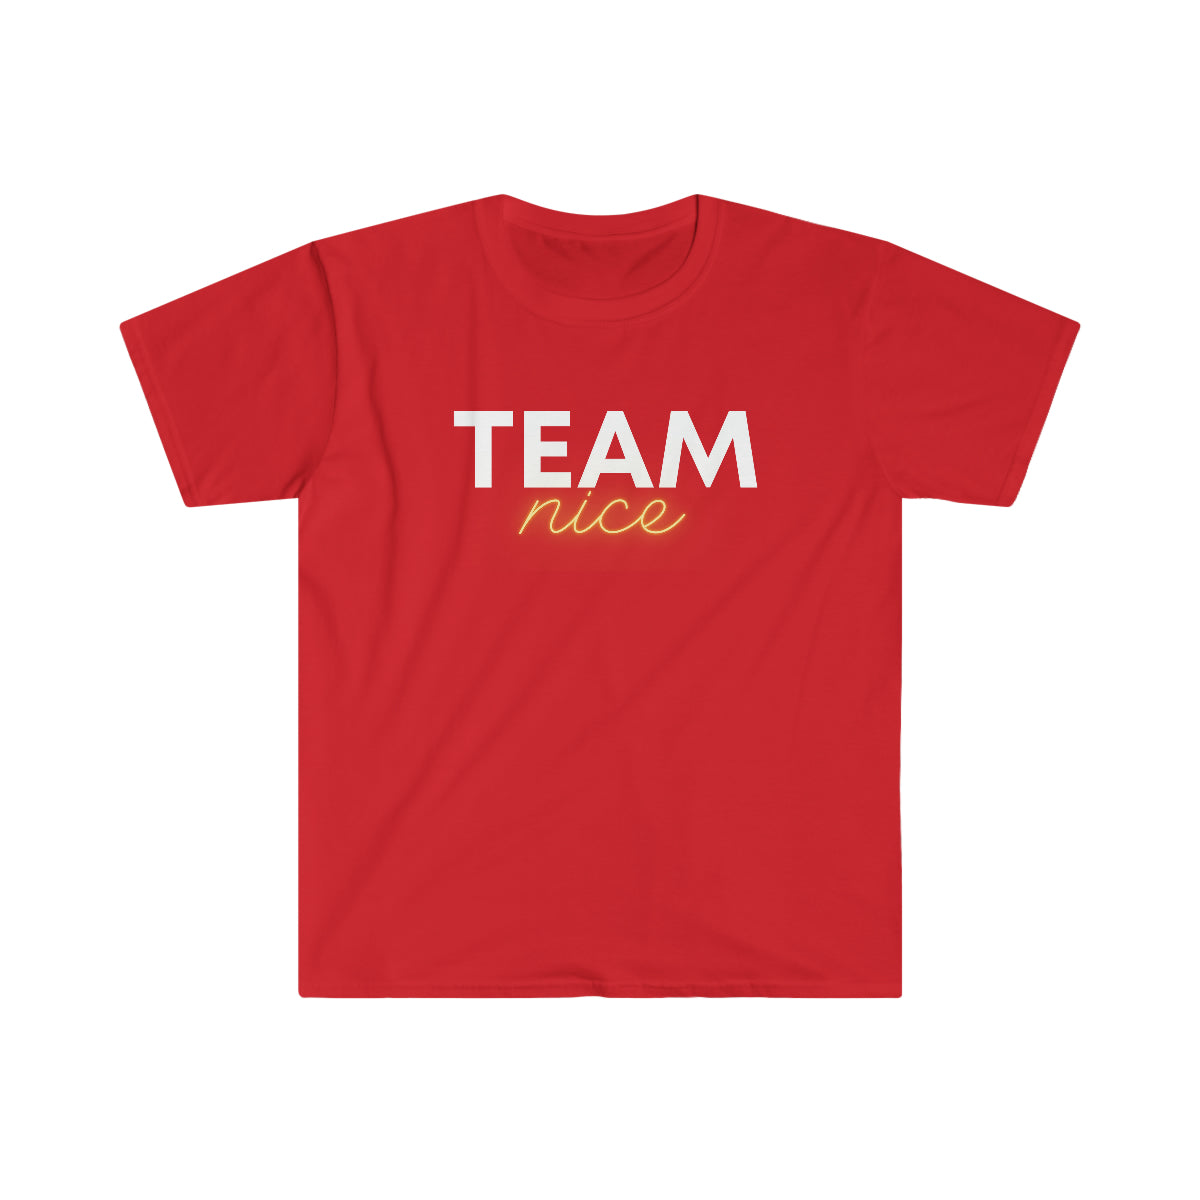 Team Naughty or Team Nice T-Shirt